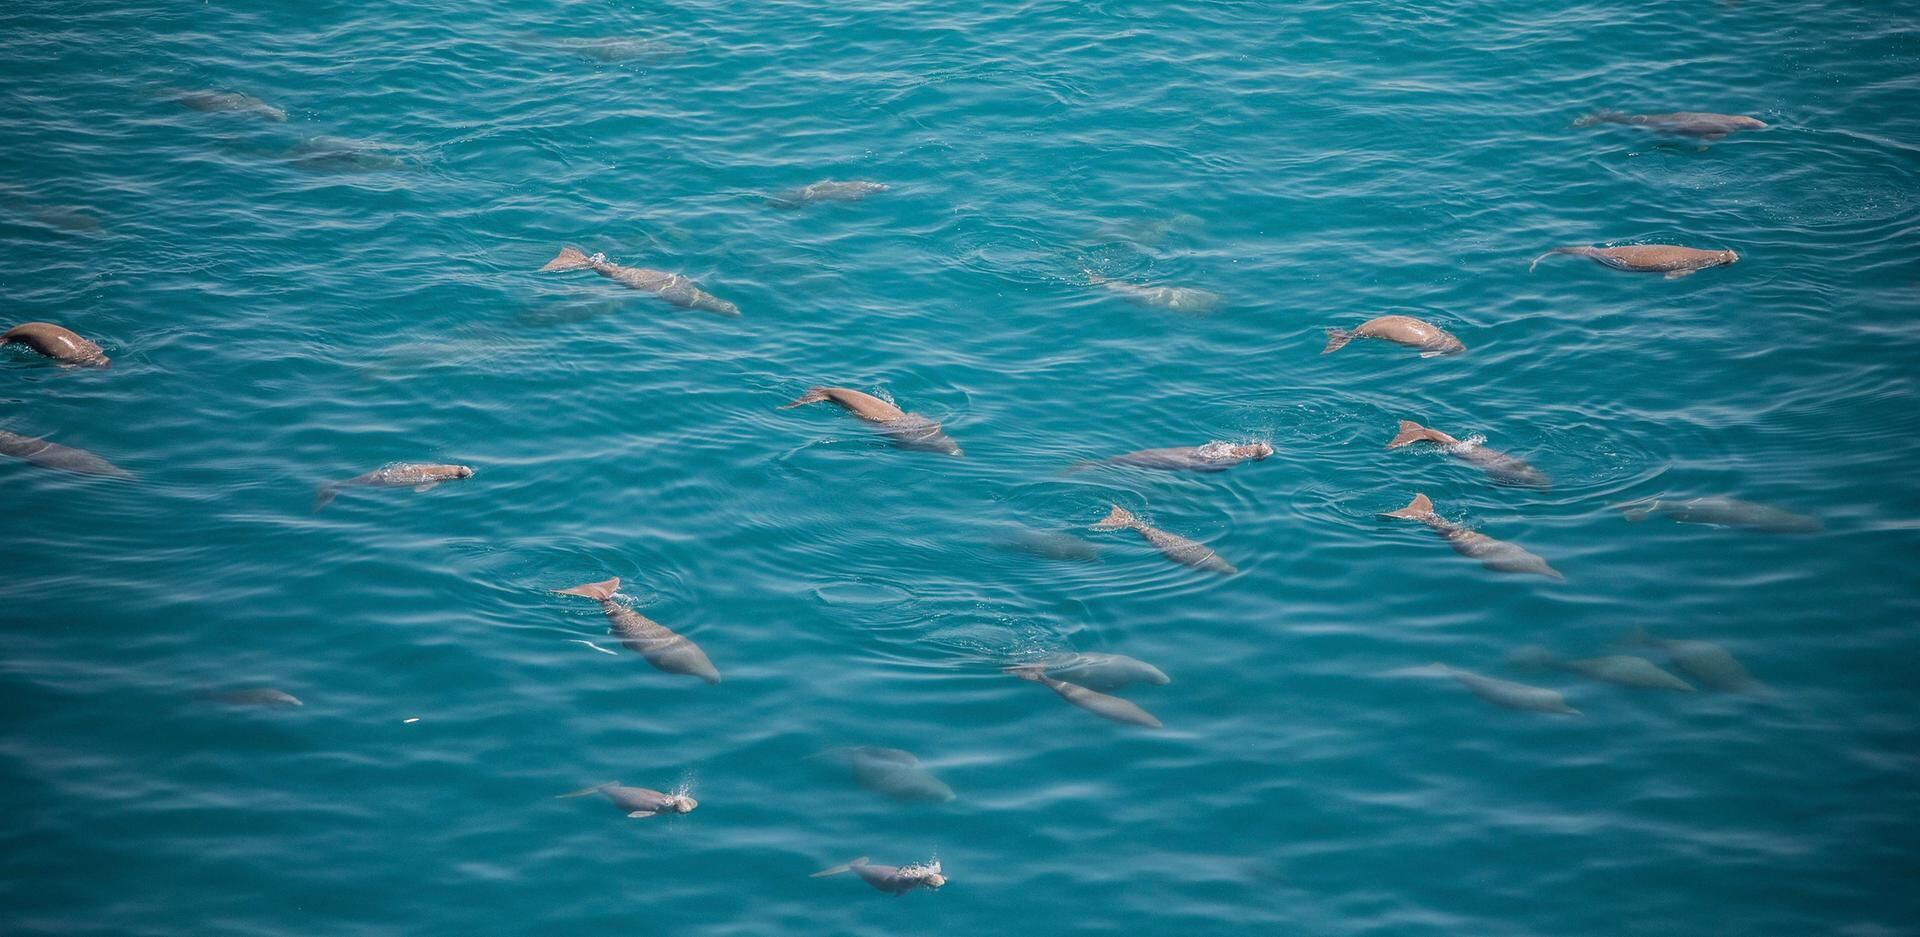 Abu Dhabi's dugong population saved by fishing net ban